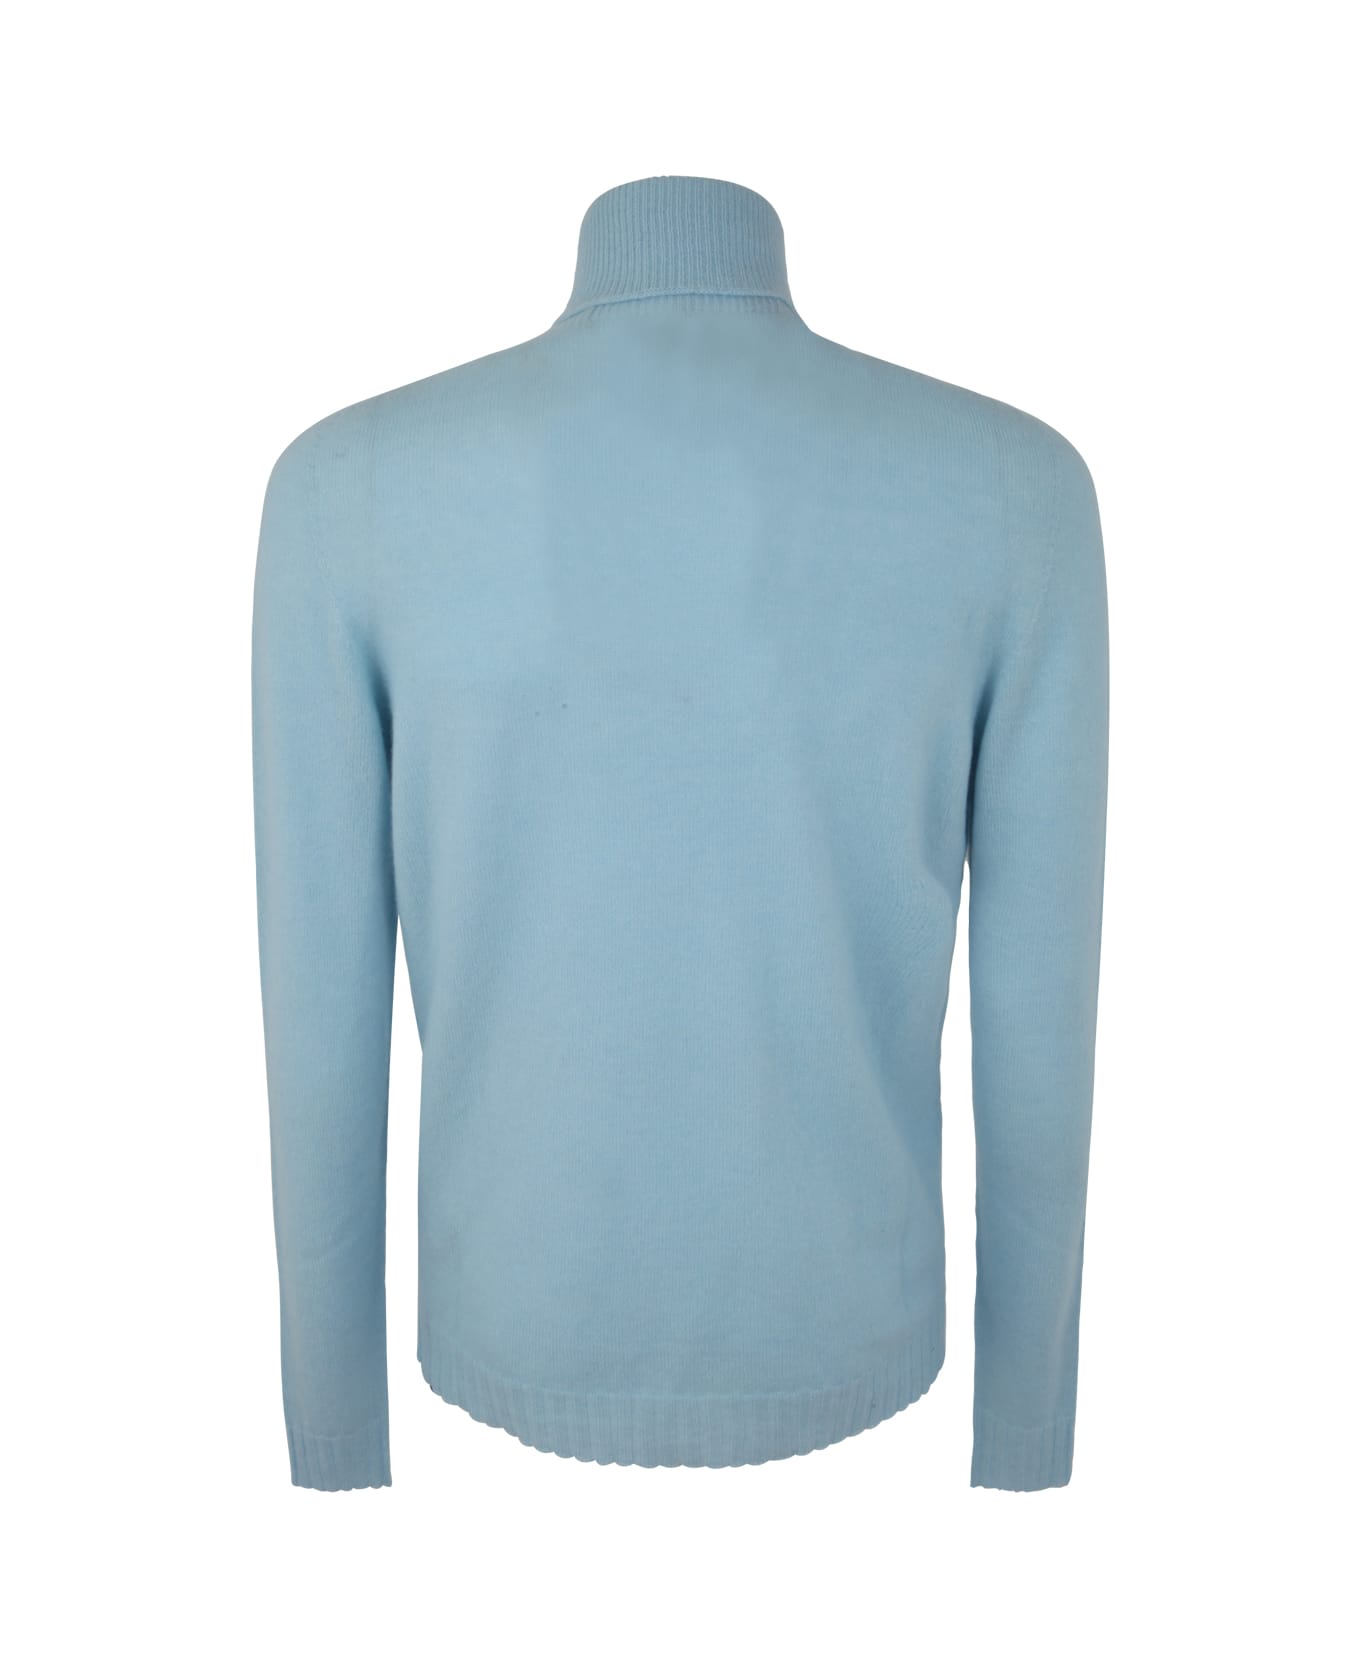 MD75 Cashmere Turtle Neck Sweater - Light Blue ニットウェア